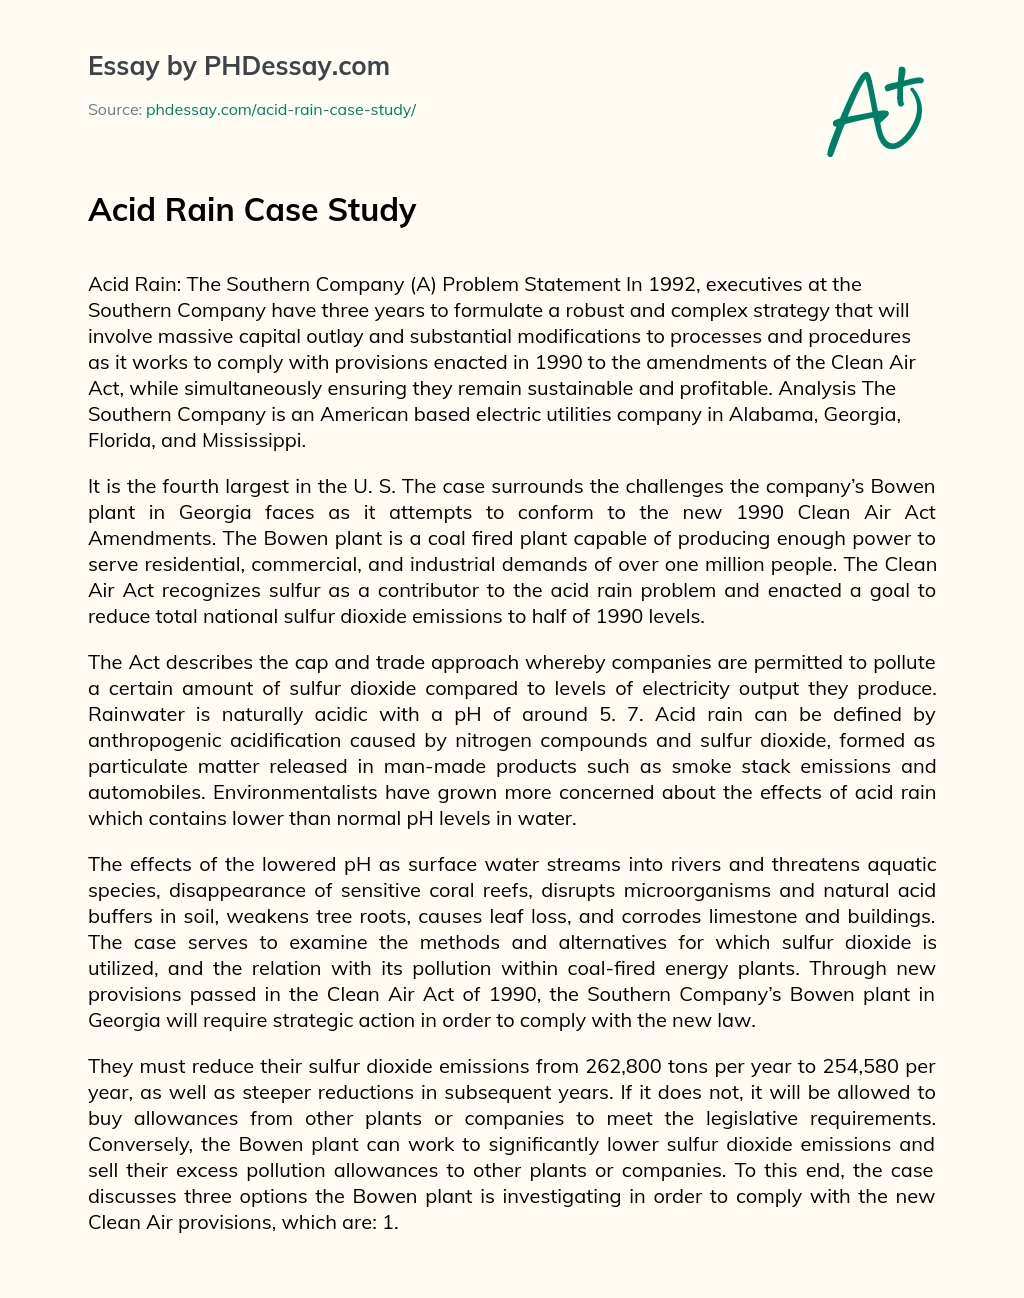 a case study report on acid rain